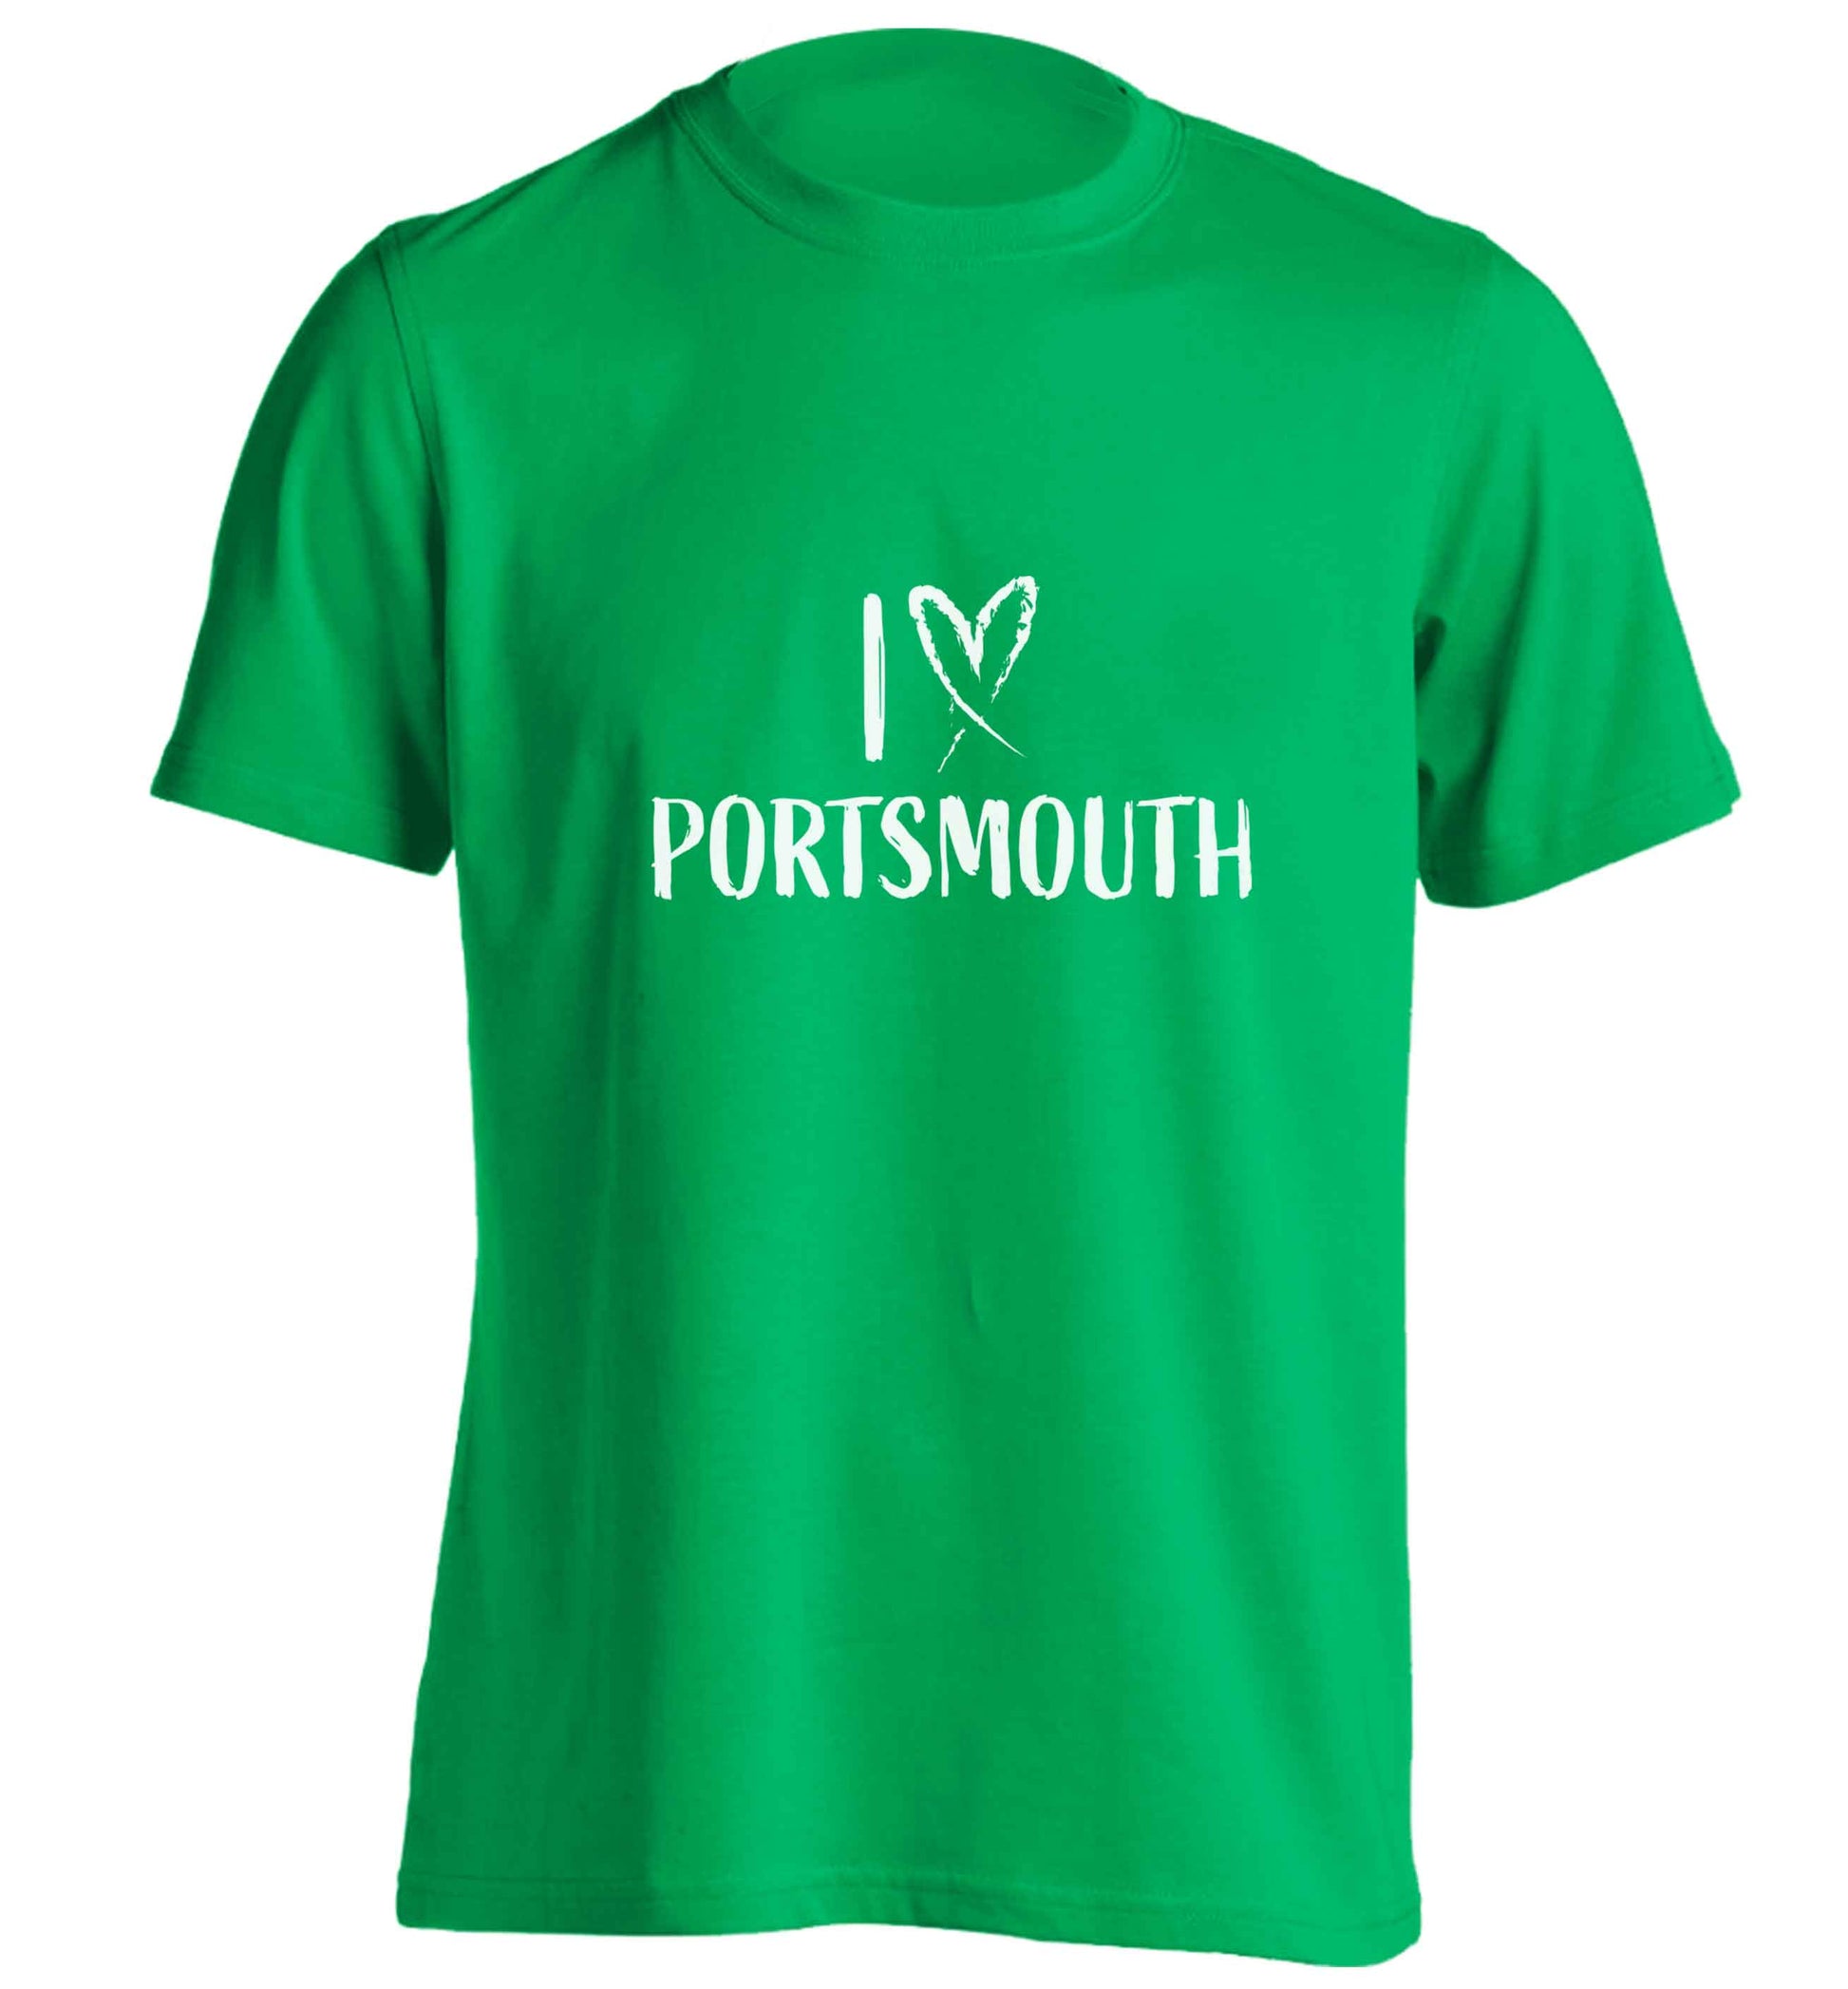 I love Portsmouth adults unisex green Tshirt 2XL